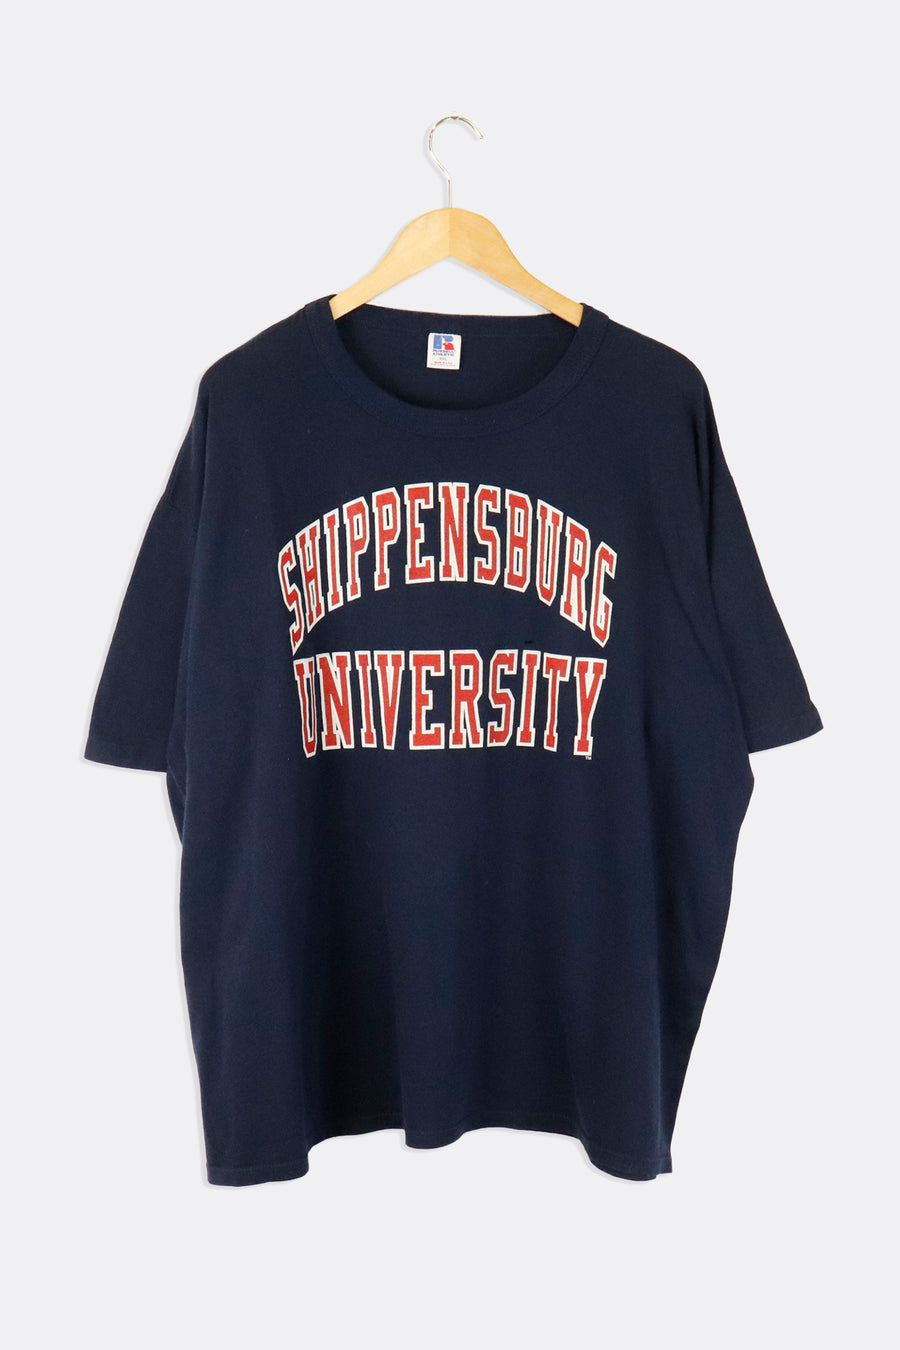 Vintage Varsity Shippensburg University Red Lettering Outlined In White Vinyl Simple T Shirt Sz 2XL